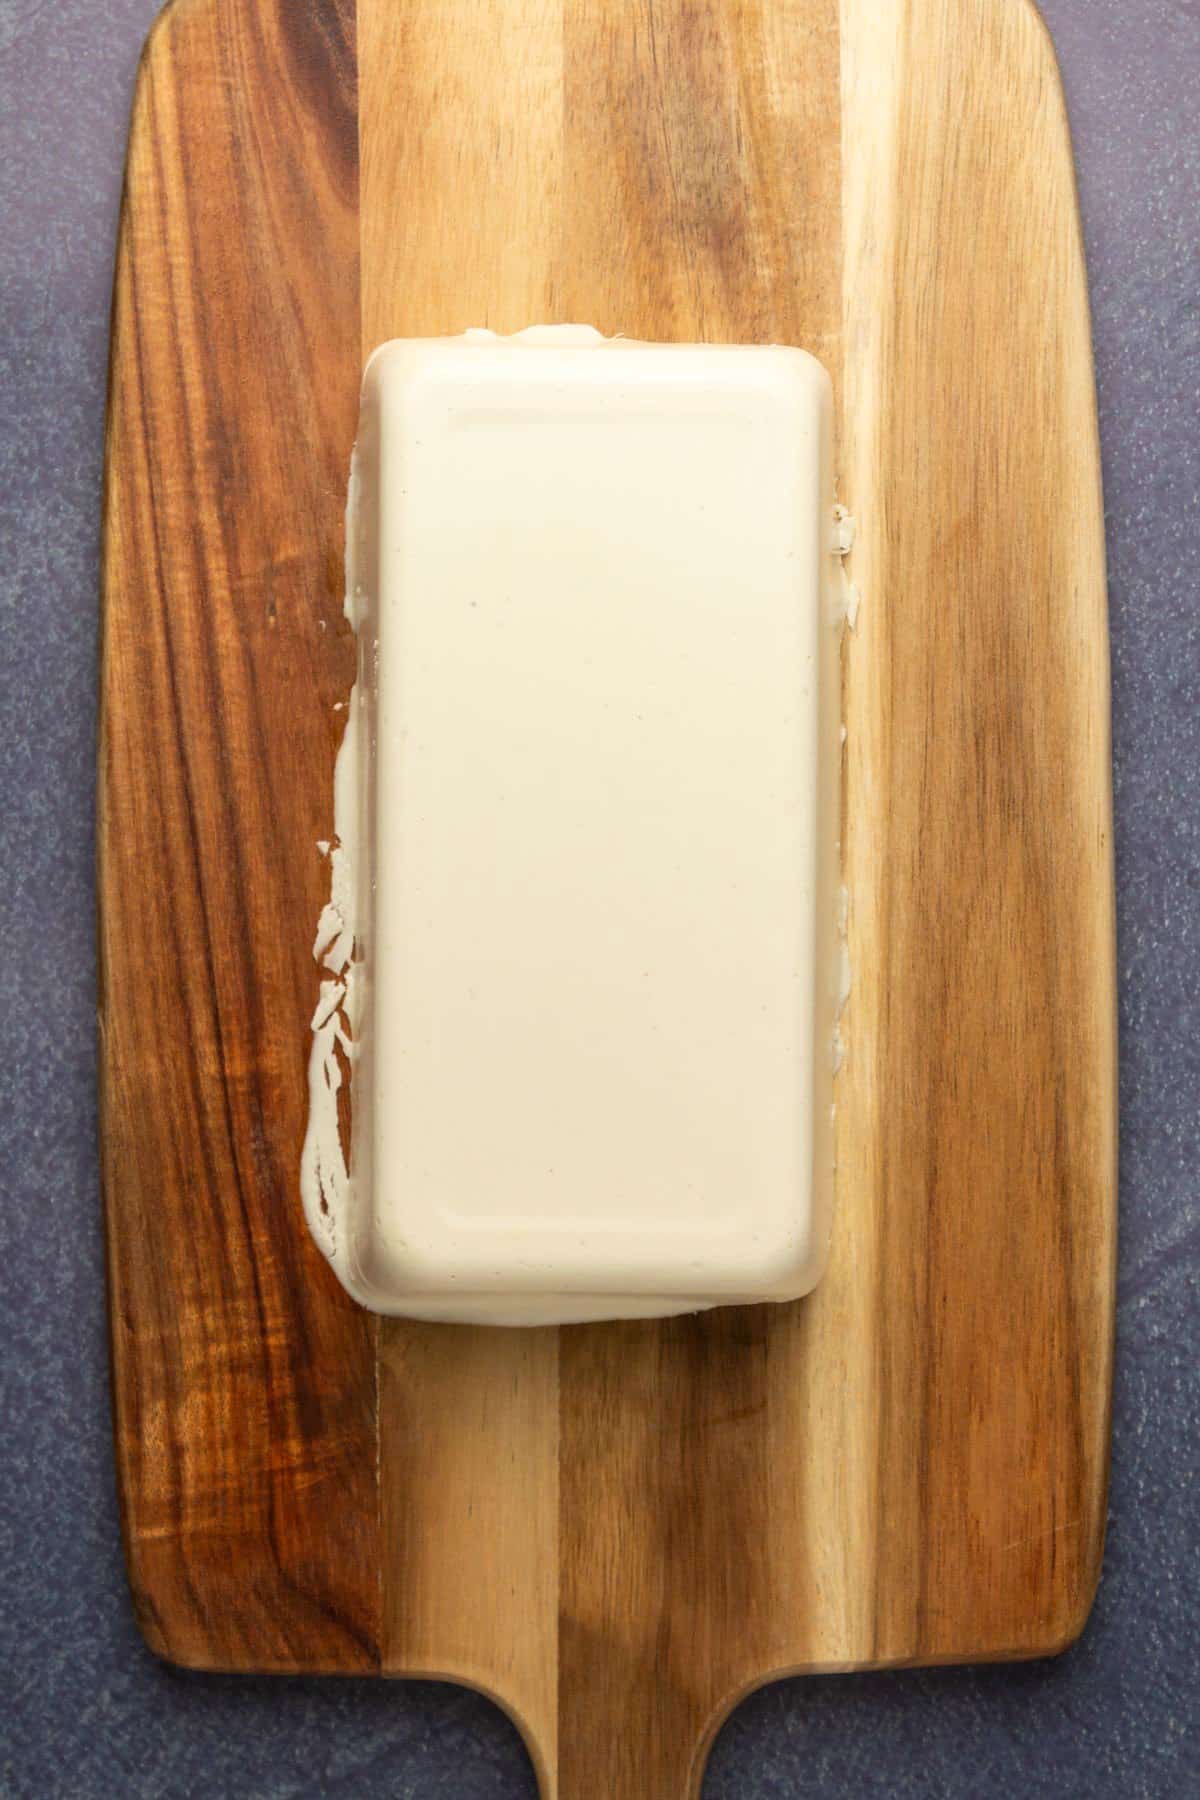 Vegan cheese on a cutting board.